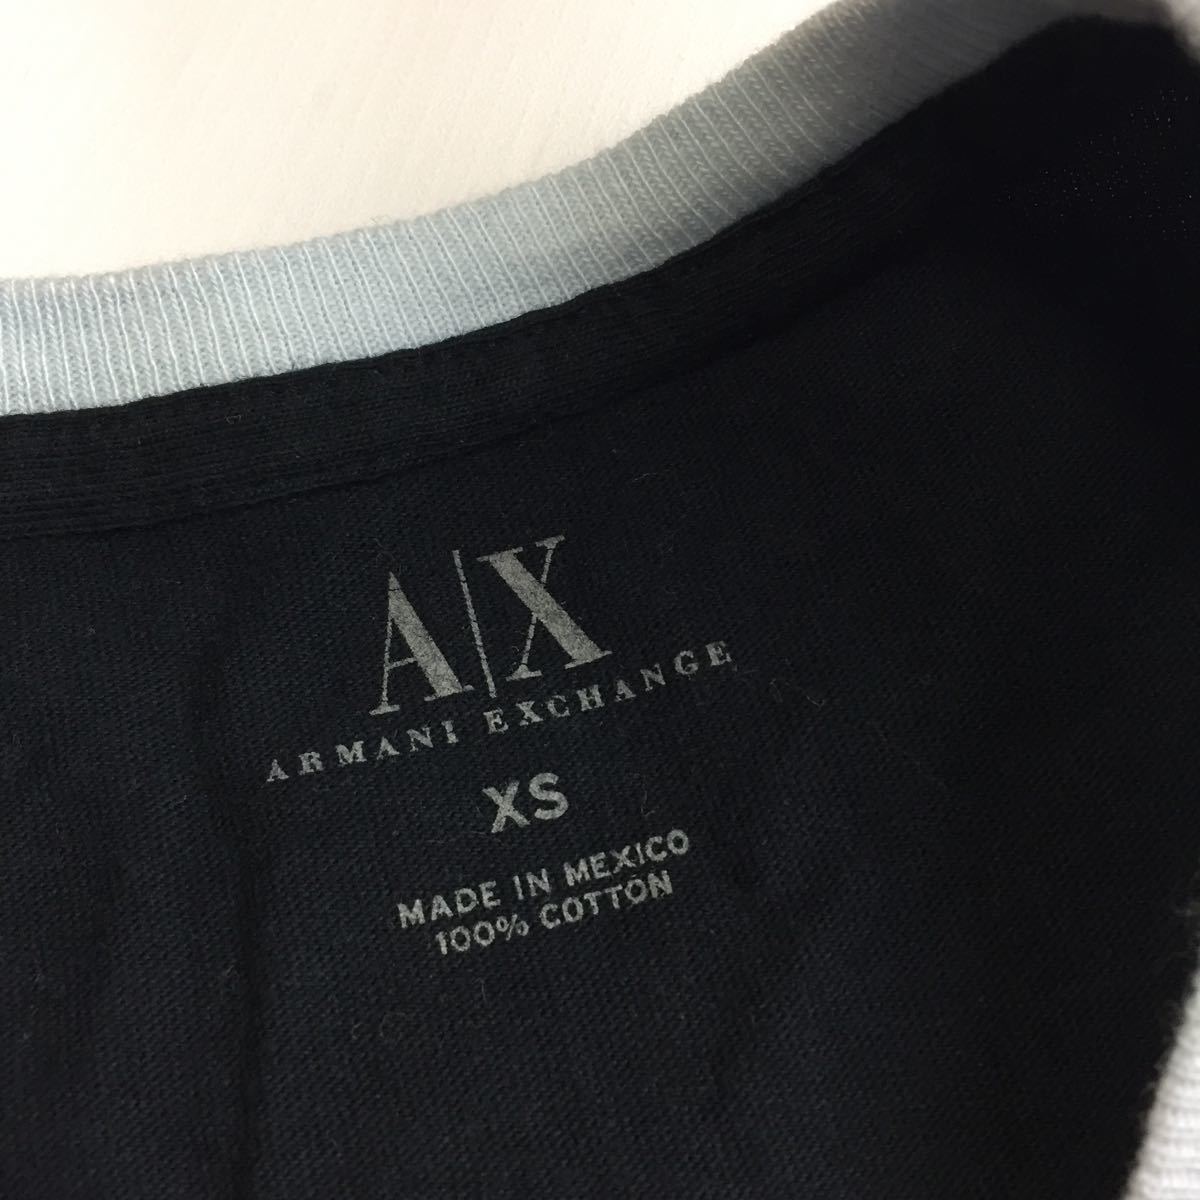 ARMANI EXCHANGE アルマーニエクスチェンジ Tシャツ 黒系 サイズXS 半袖 トップス (管理番号2284)_画像2